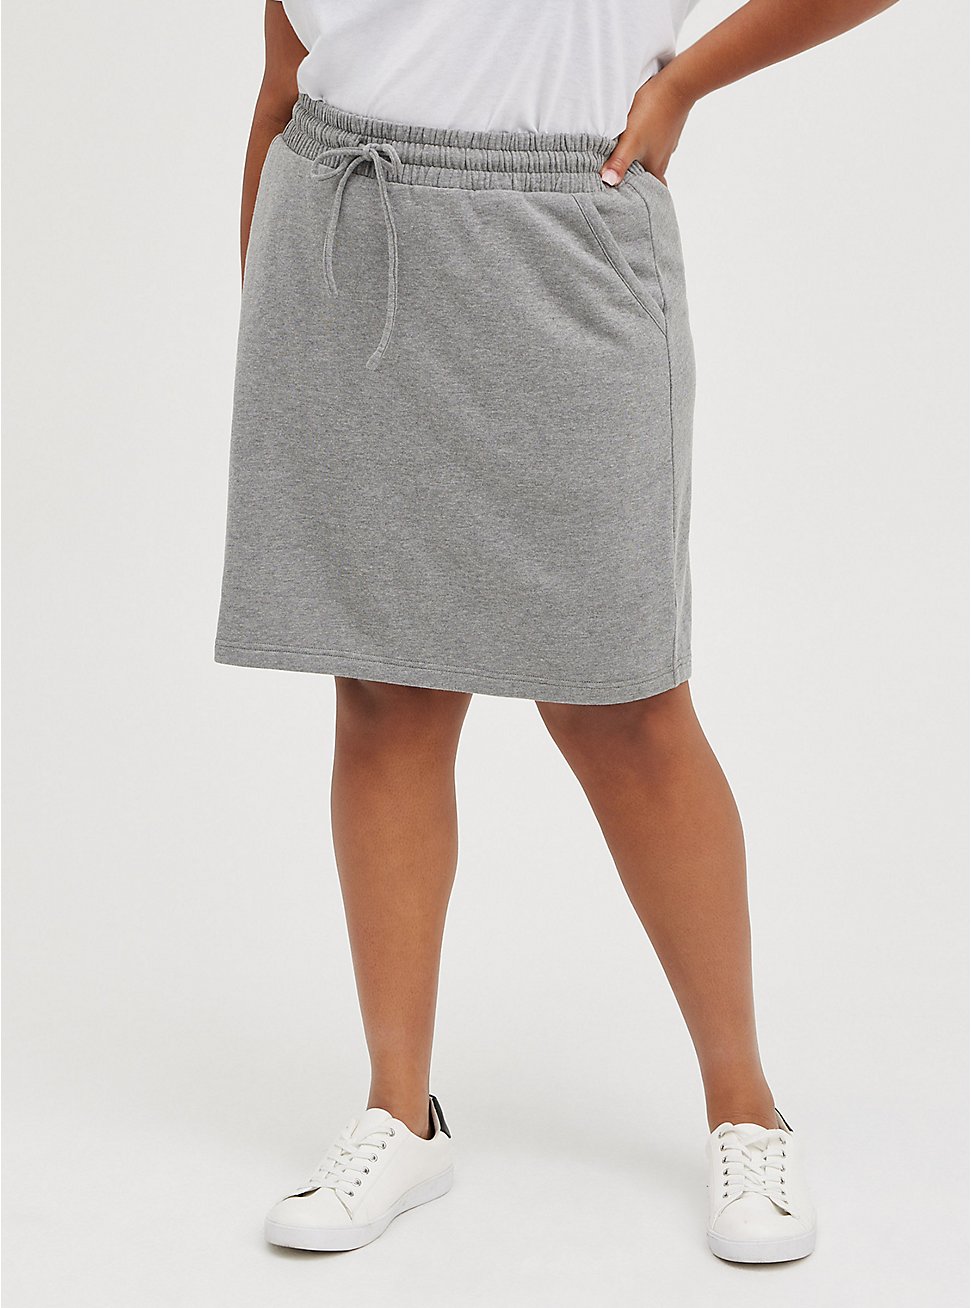 A-Line Mini Skirt - Fleece Grey, HEATHER GREY, hi-res